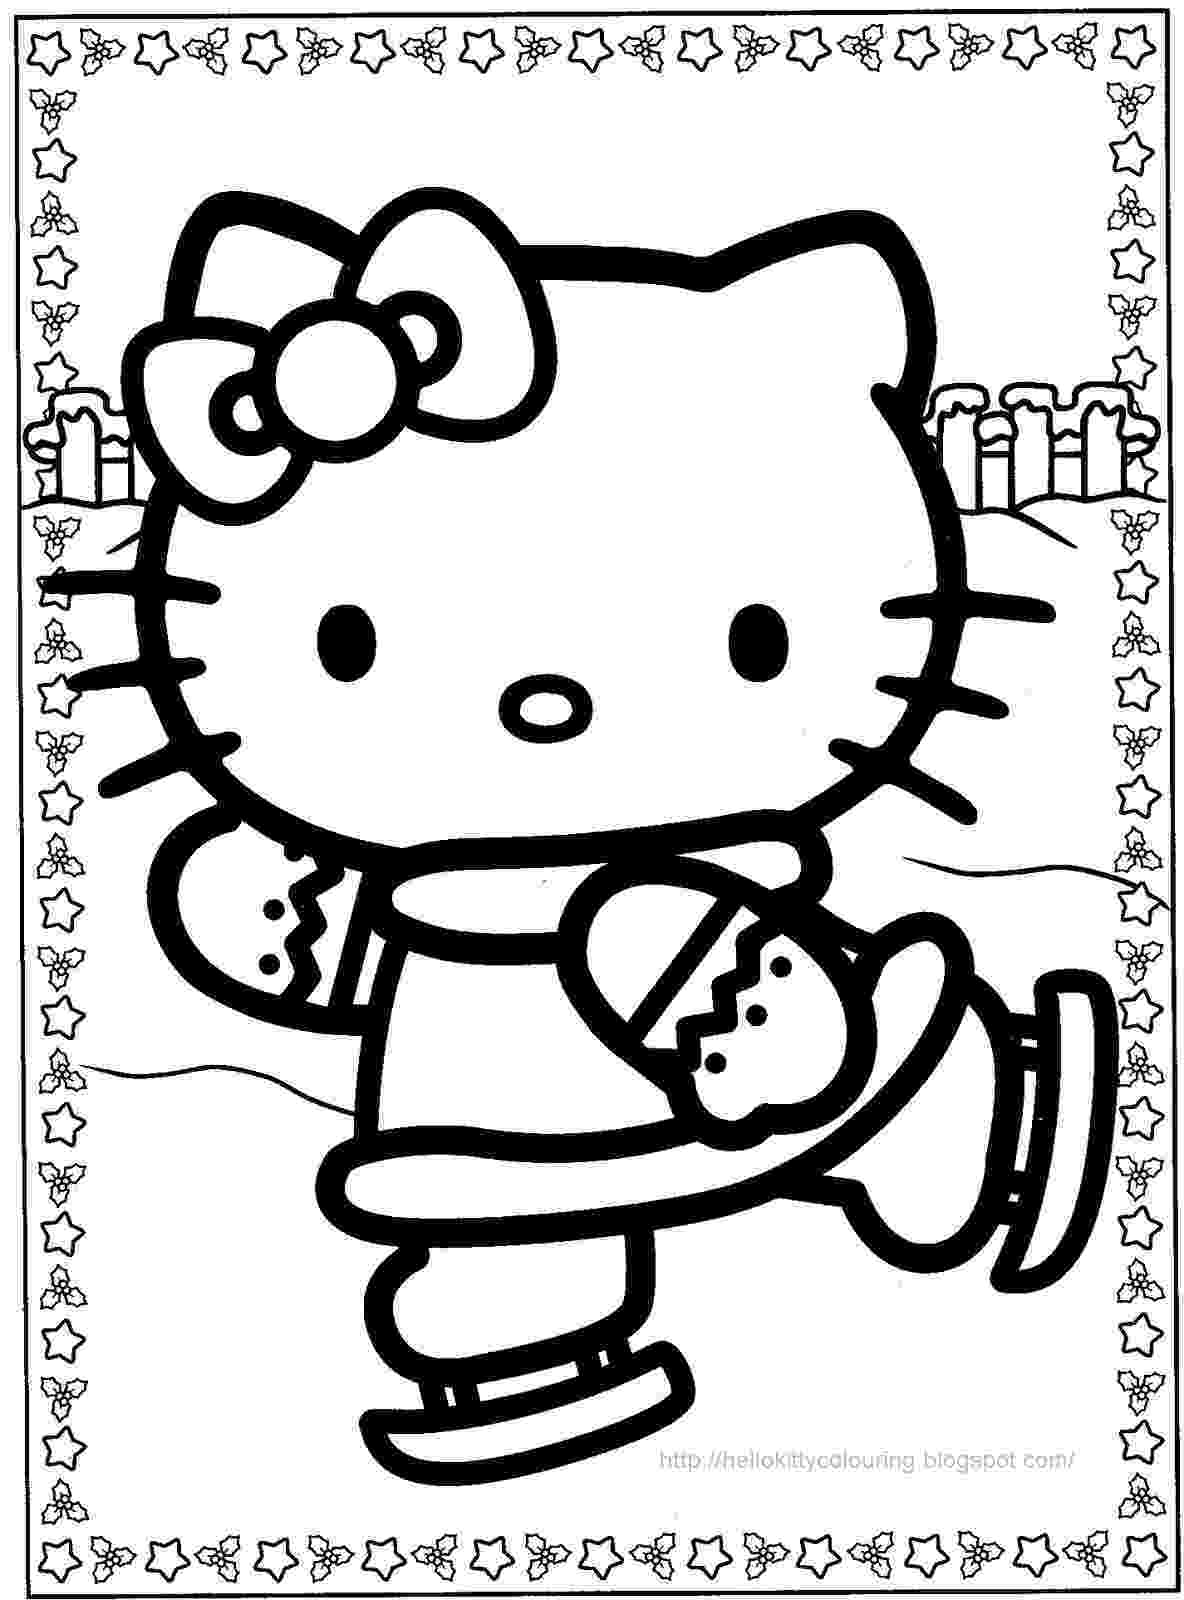 hello kitty coloring pages free bauzinho da web baÚ da web desenhos e riscos da hello hello coloring kitty free pages 